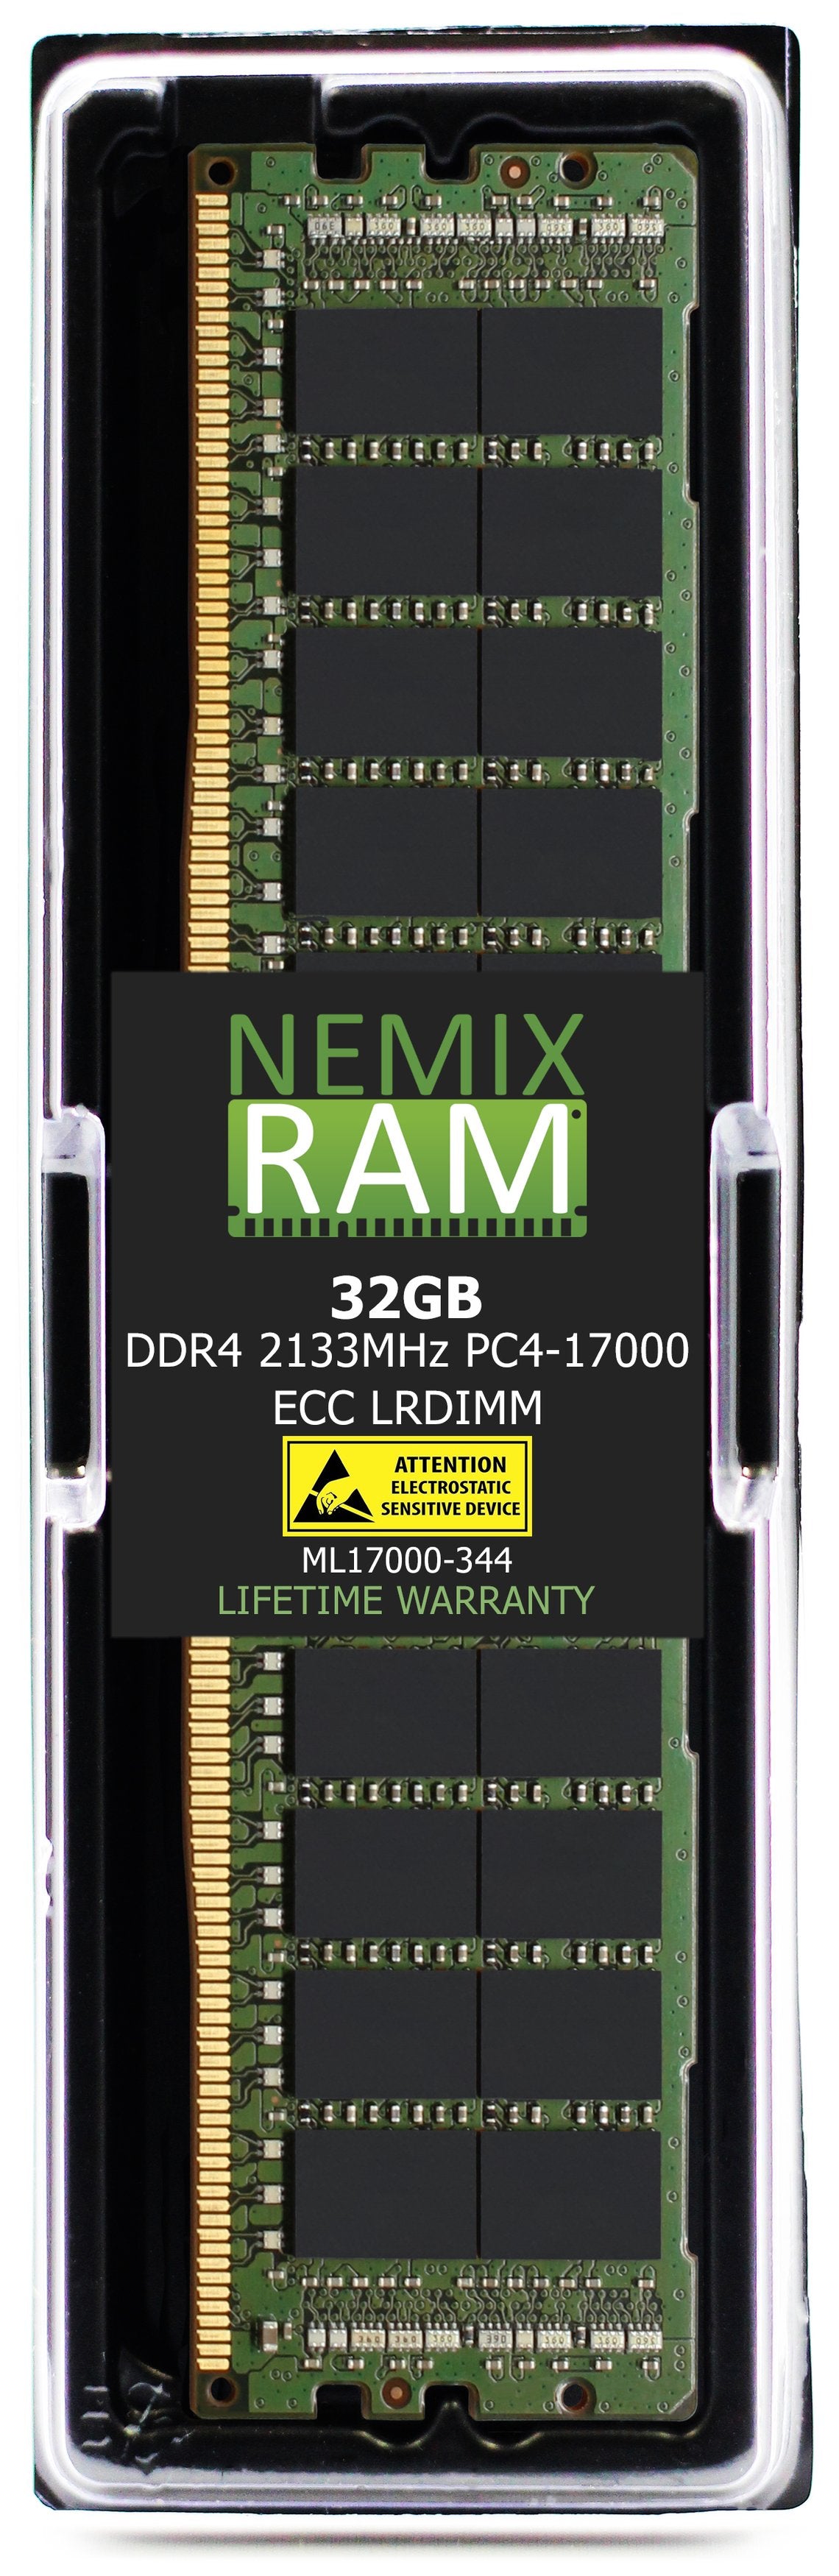 NEC Express5800 R120f-1E Memory Module N8102-634F 32GBDDR4 2133MHZ PC4-17000 LRDIMM